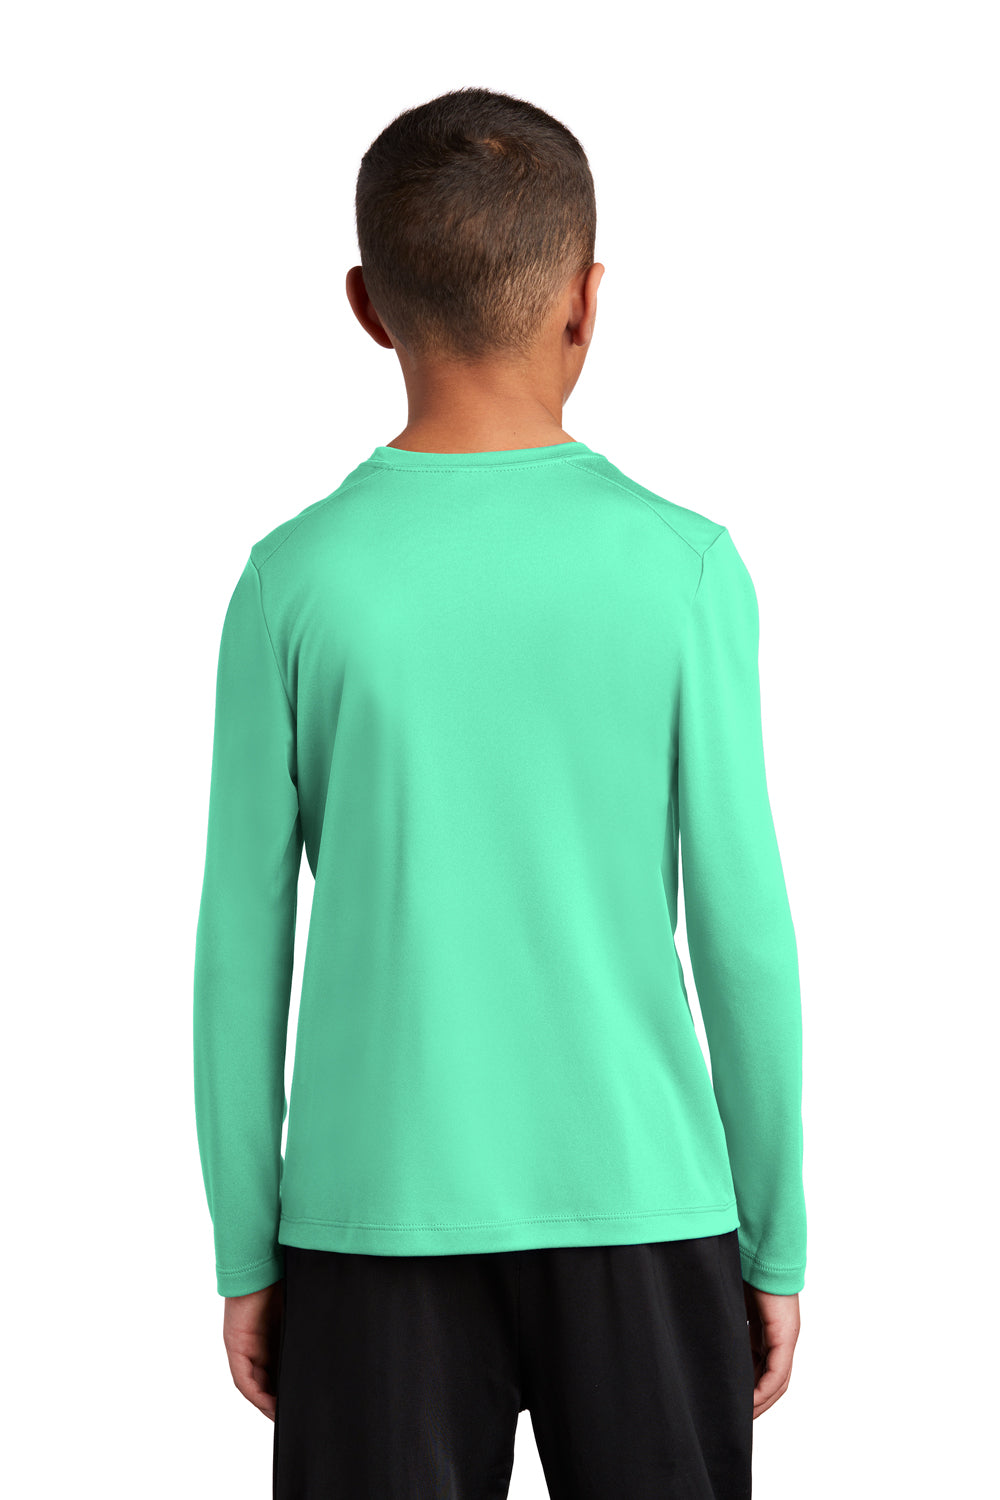 Sport-Tek Youth Long Sleeve Crewneck T-Shirt Bright Seafoam Green Side